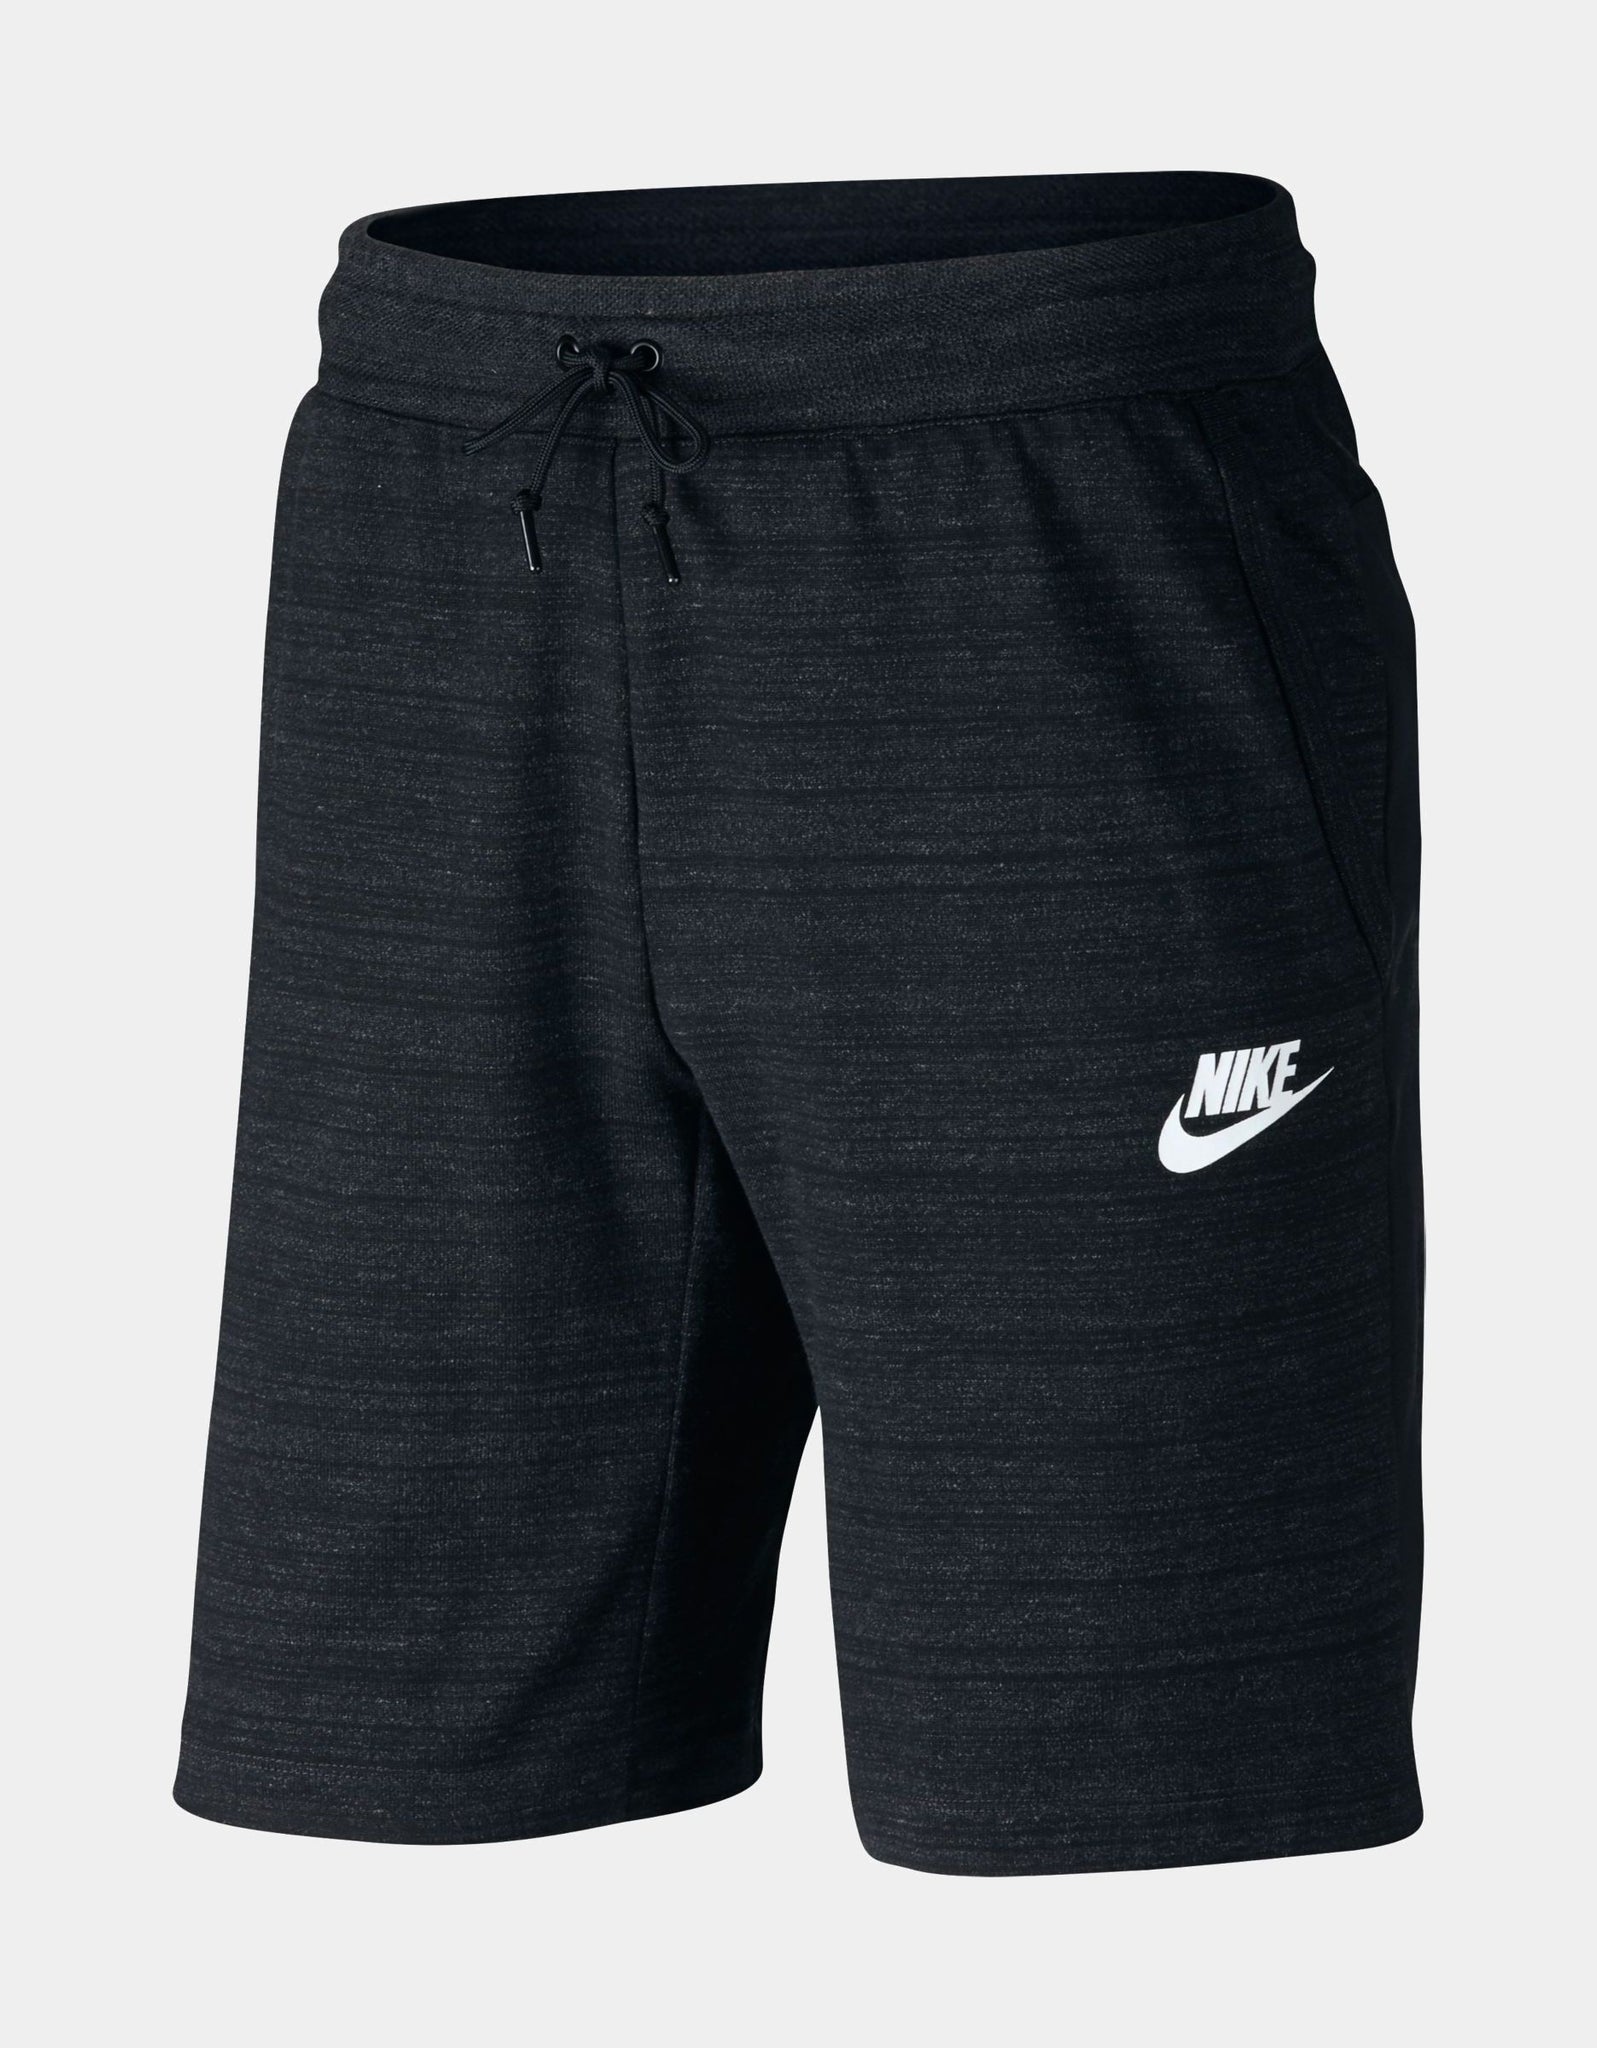 Confusión archivo Requisitos Nike Advance 15 Mens Knit Shorts Black 885925-010 – Shoe Palace